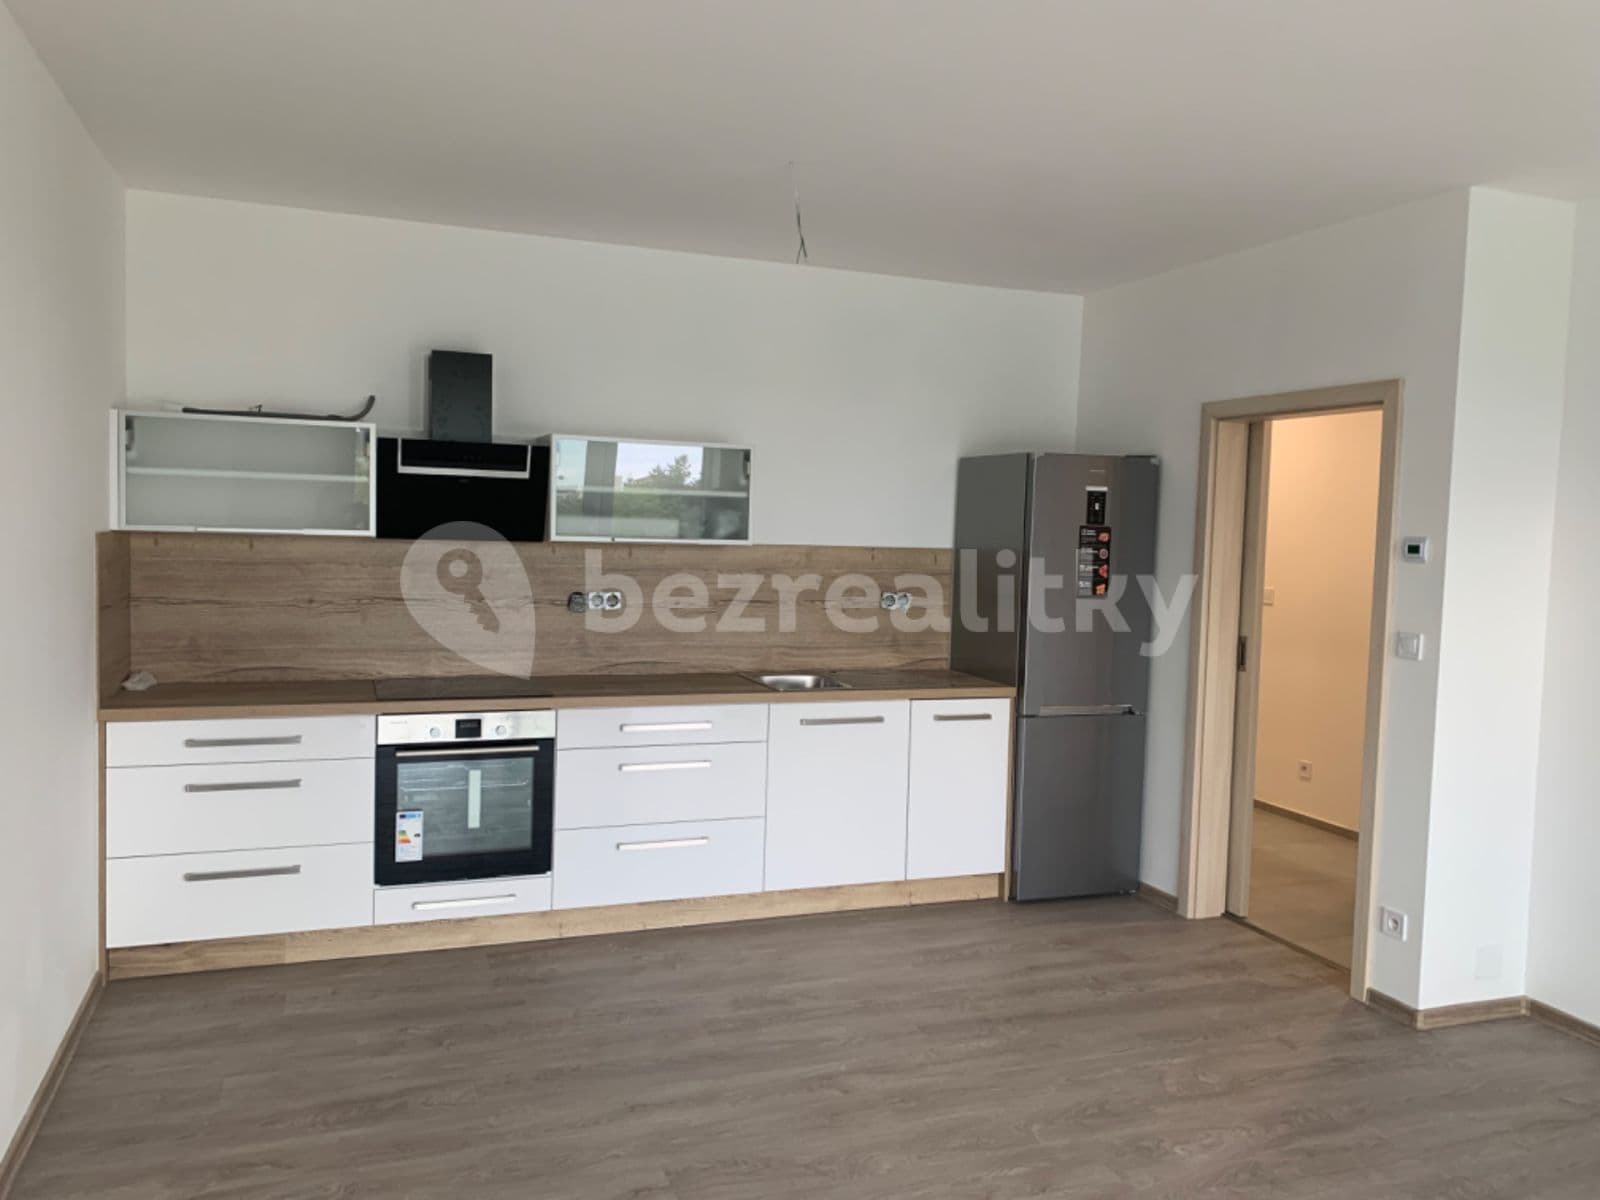 1 bedroom with open-plan kitchen flat to rent, 56 m², Olomouc, Olomoucký Region